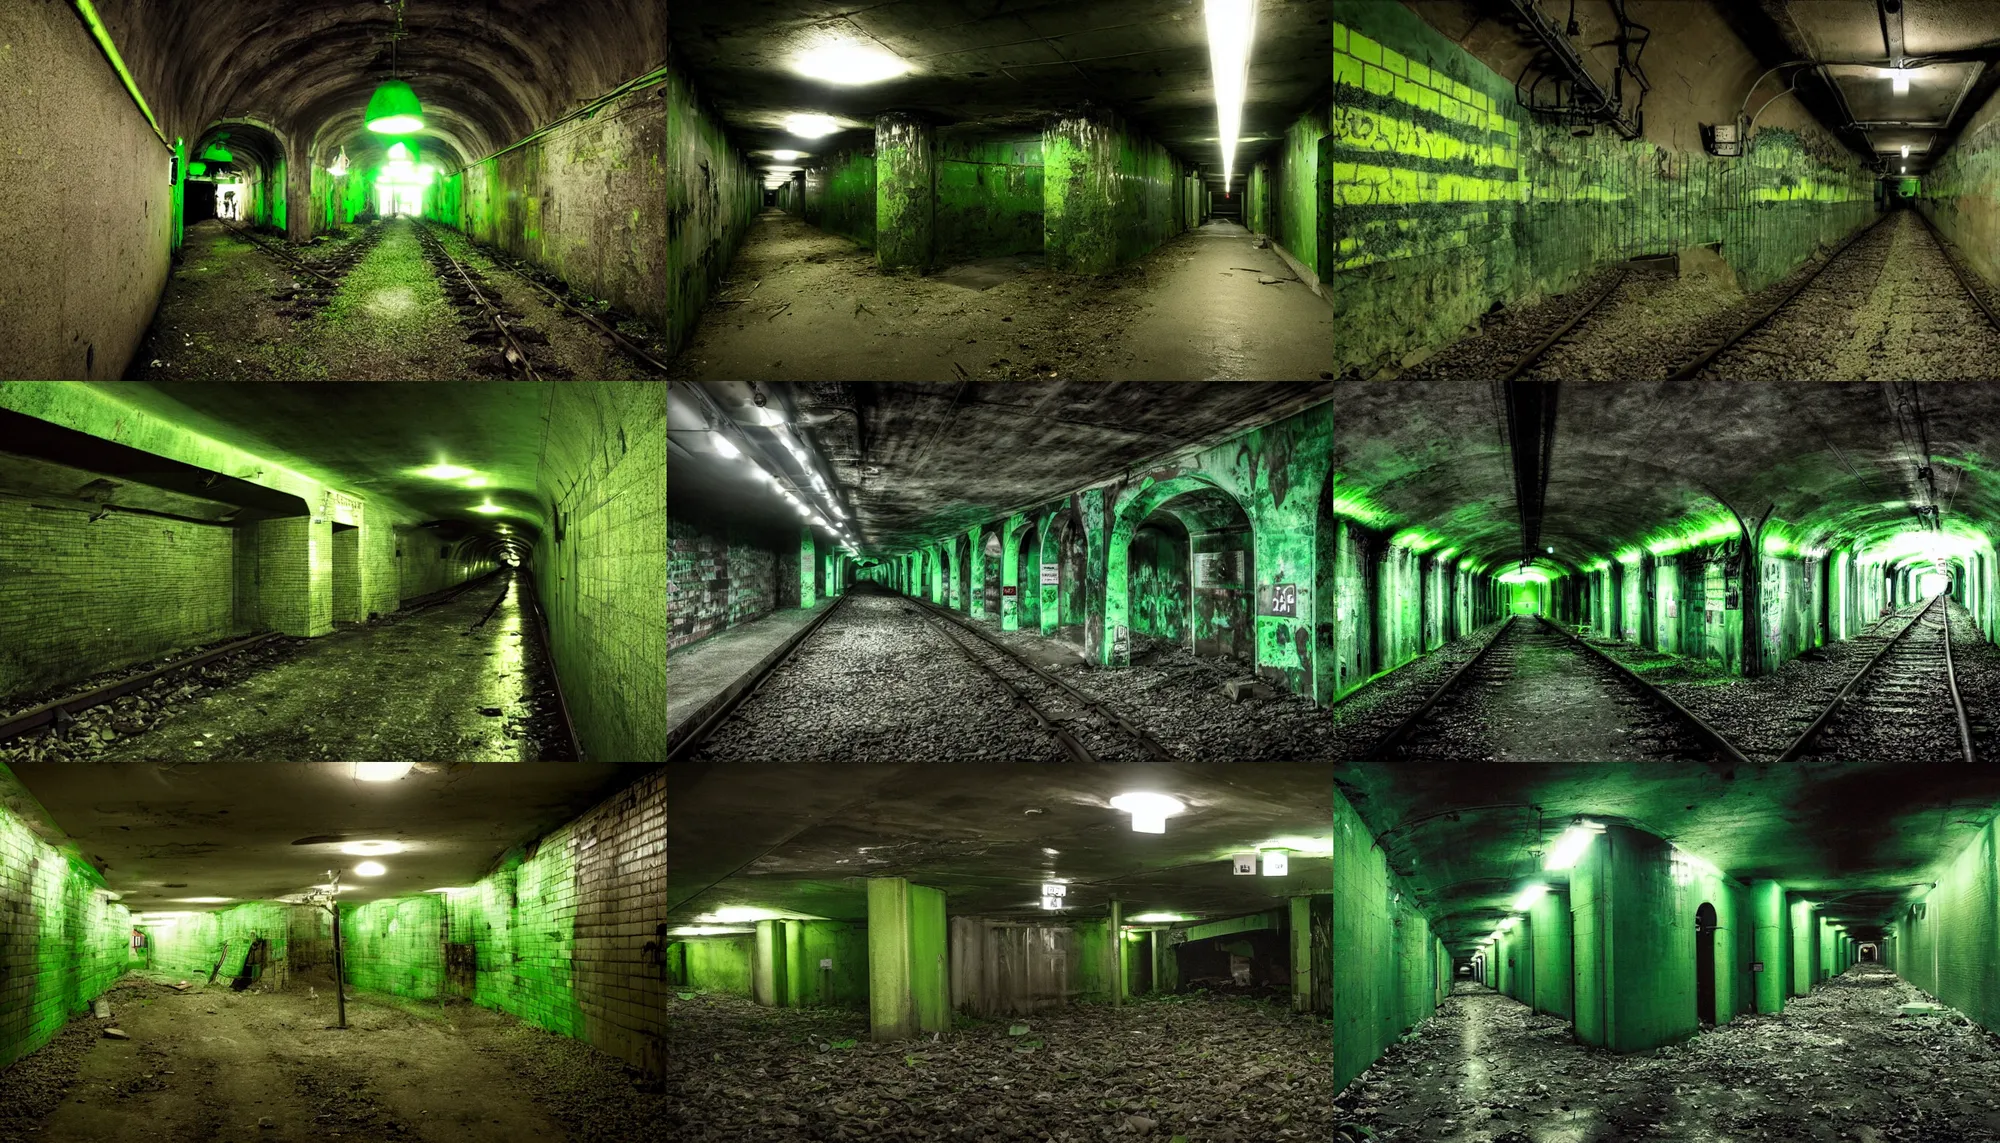 Prompt: dark subway tunnel, creepy, abandoned, radioactive green mushrooms